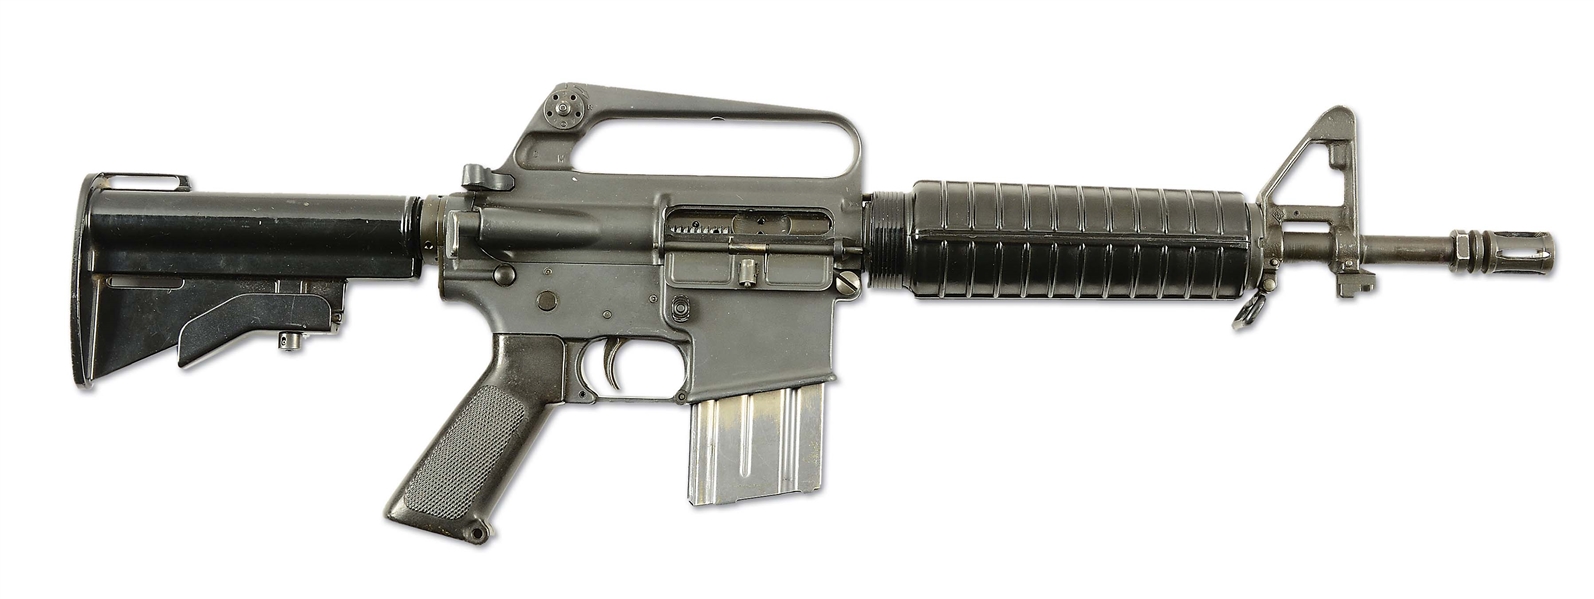 (N) H.T. ARMORY REGISTERED COLT AR-15 A2 SPORTER II (M-16) MACHINE GUN (FULLY TRANSFERABLE).